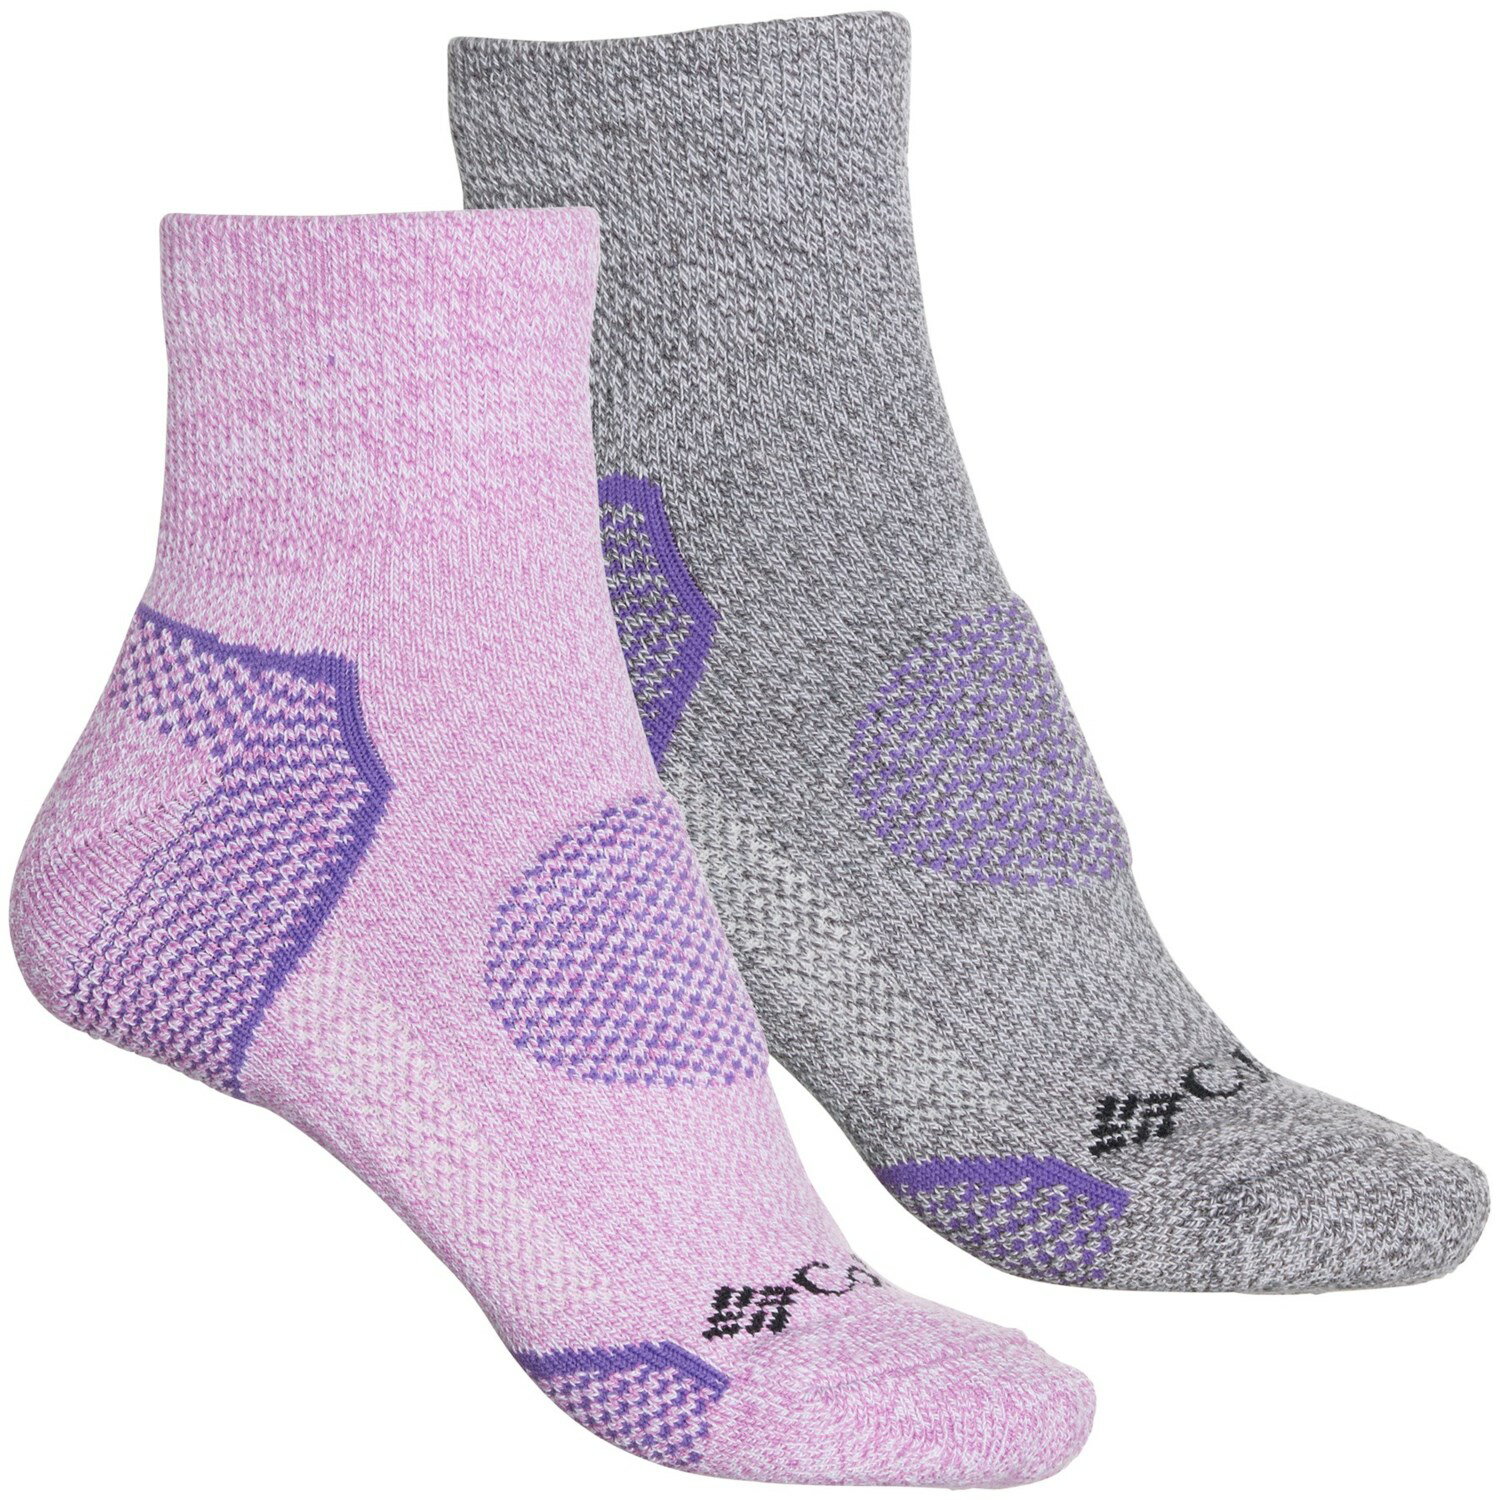 () RrAX|[cEFA fB[X oX |Cg EH[LO \bNX Columbia Sportswear women Balance Point Walking Socks (For Women) Pink